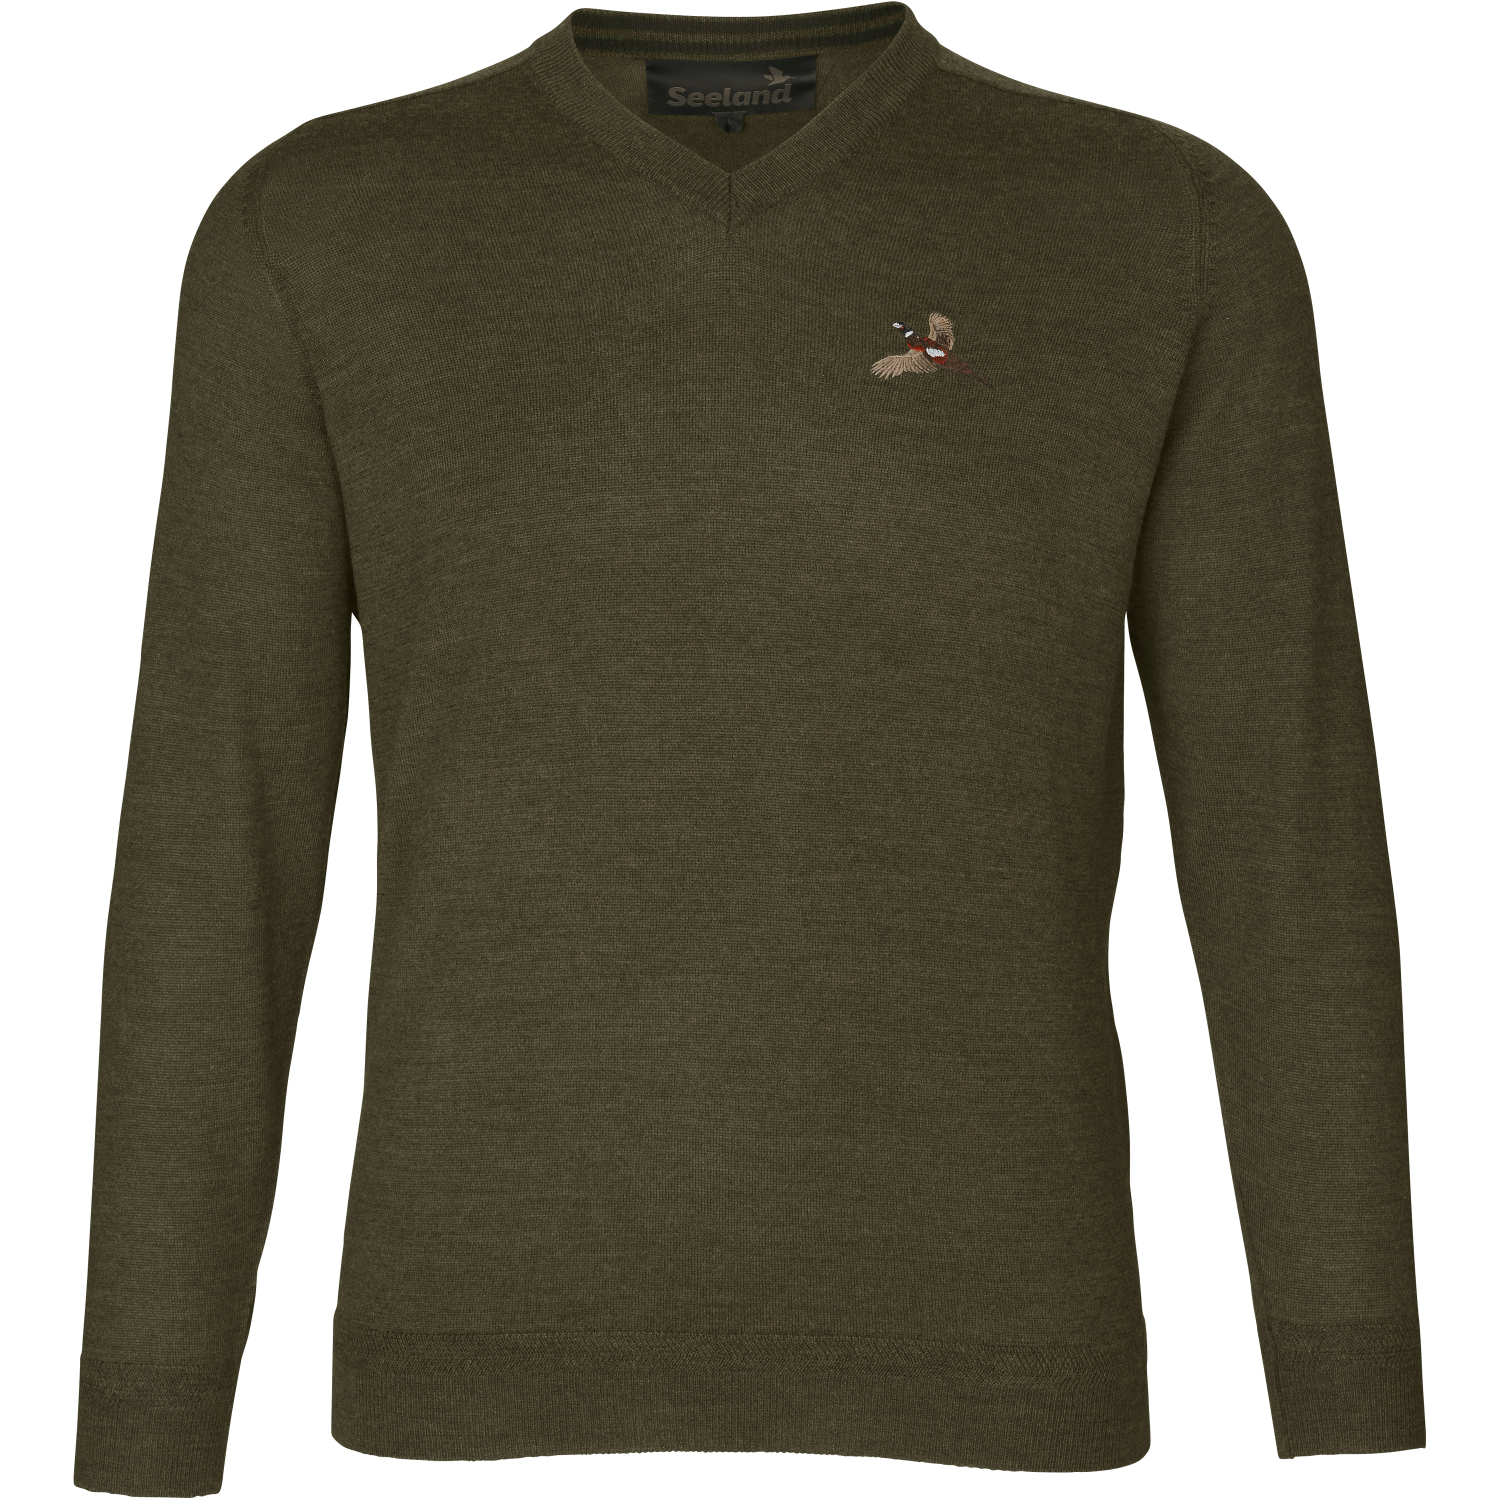 Seeland Men's Sweater Noble 